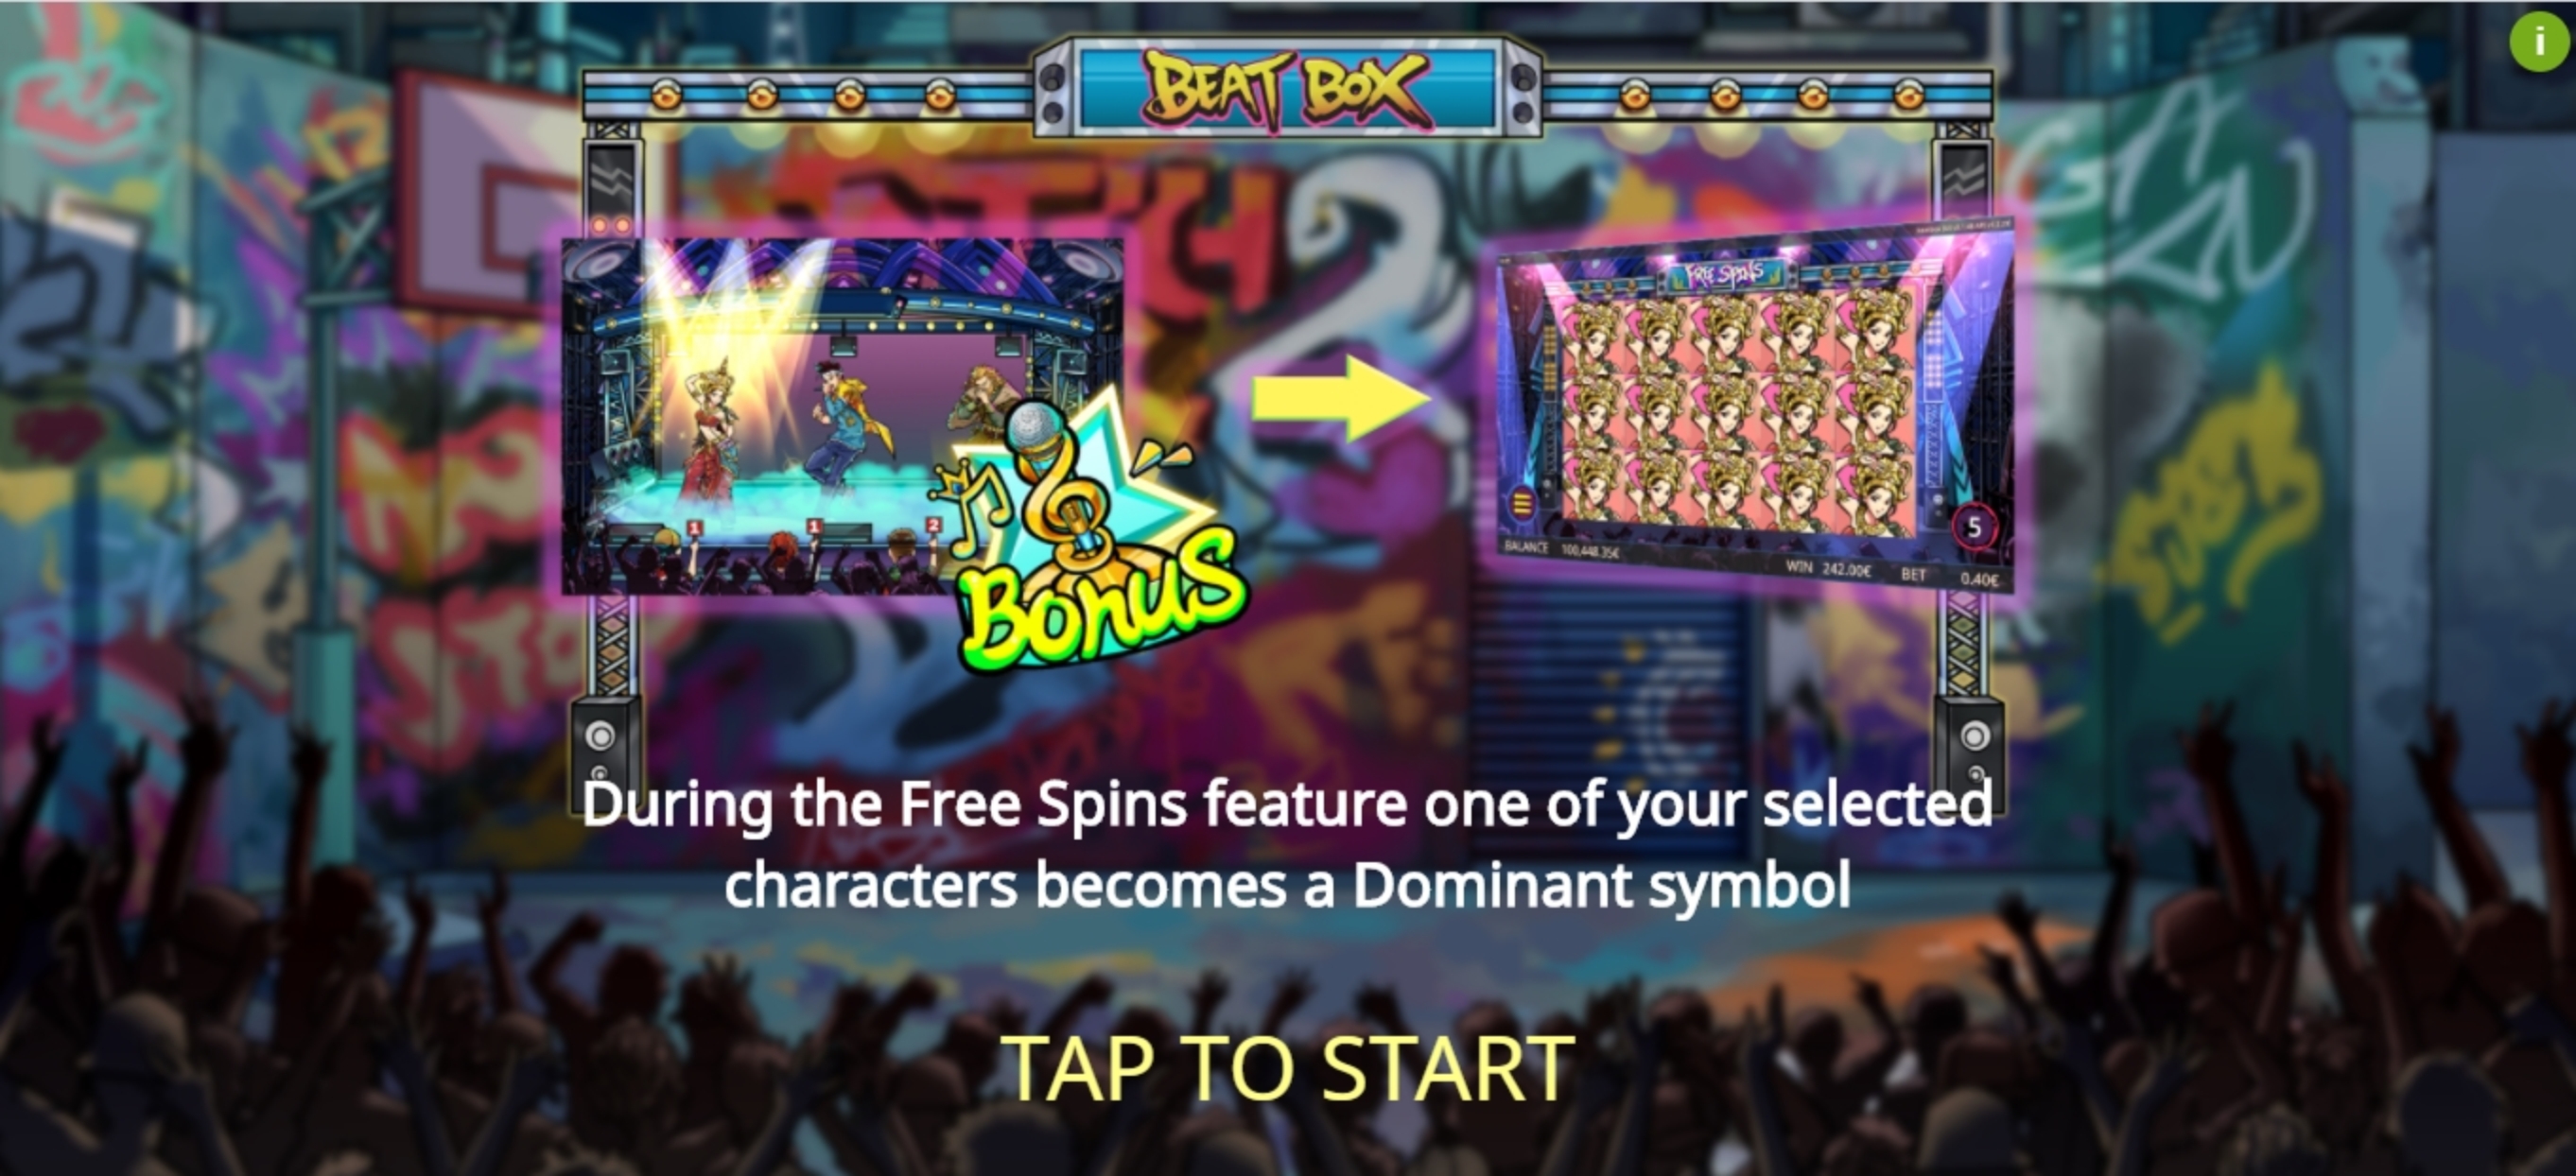 Play Beat Box Free Casino Slot Game by Gamatron